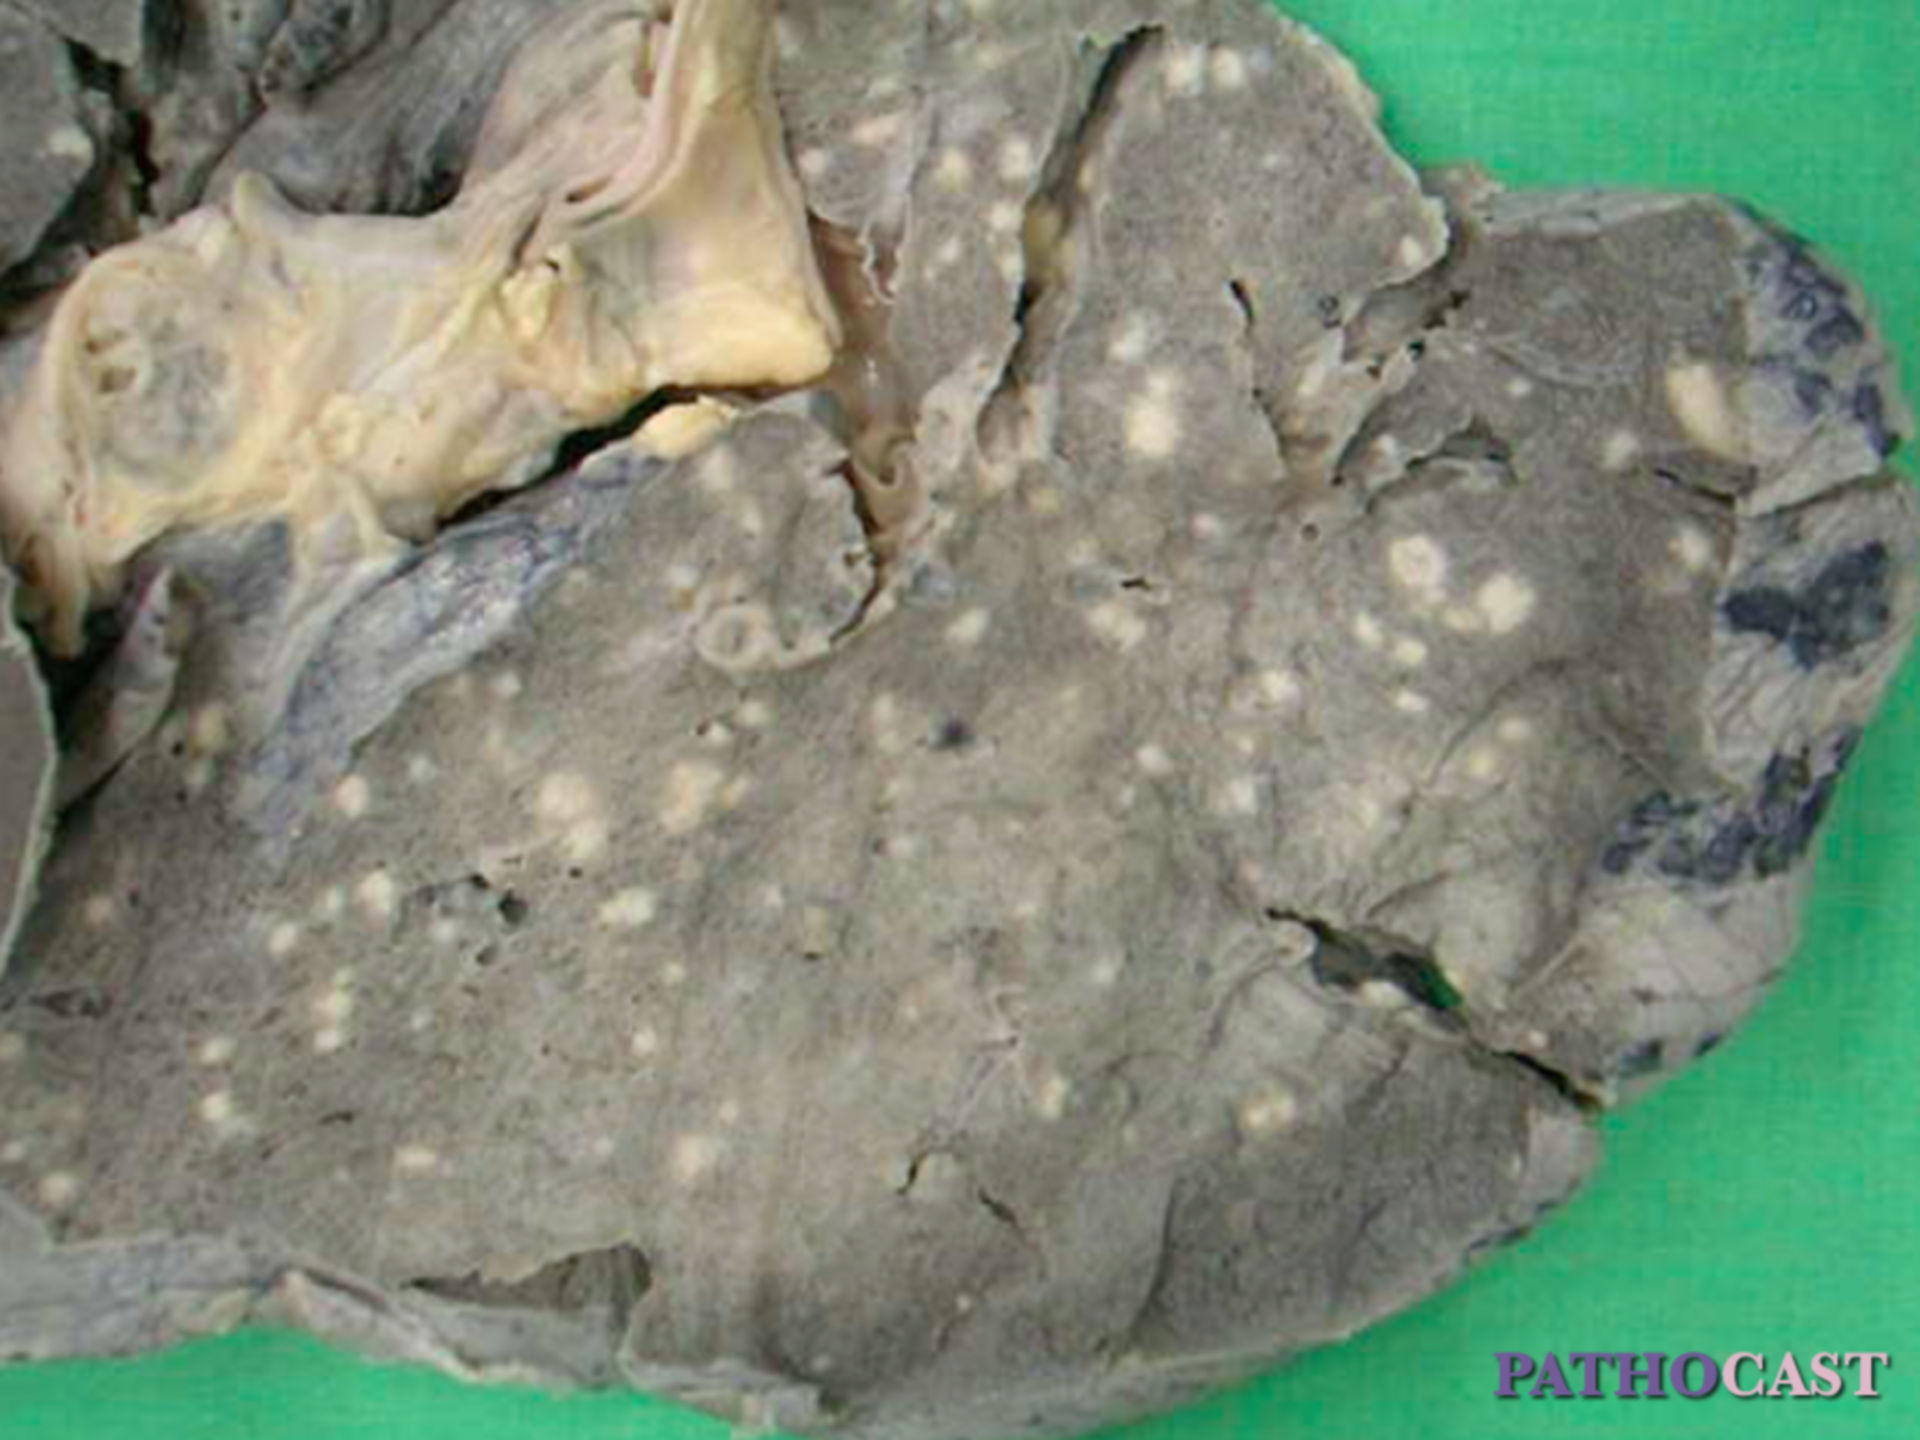 Miliartuberkulose der Lunge, Makroskopie